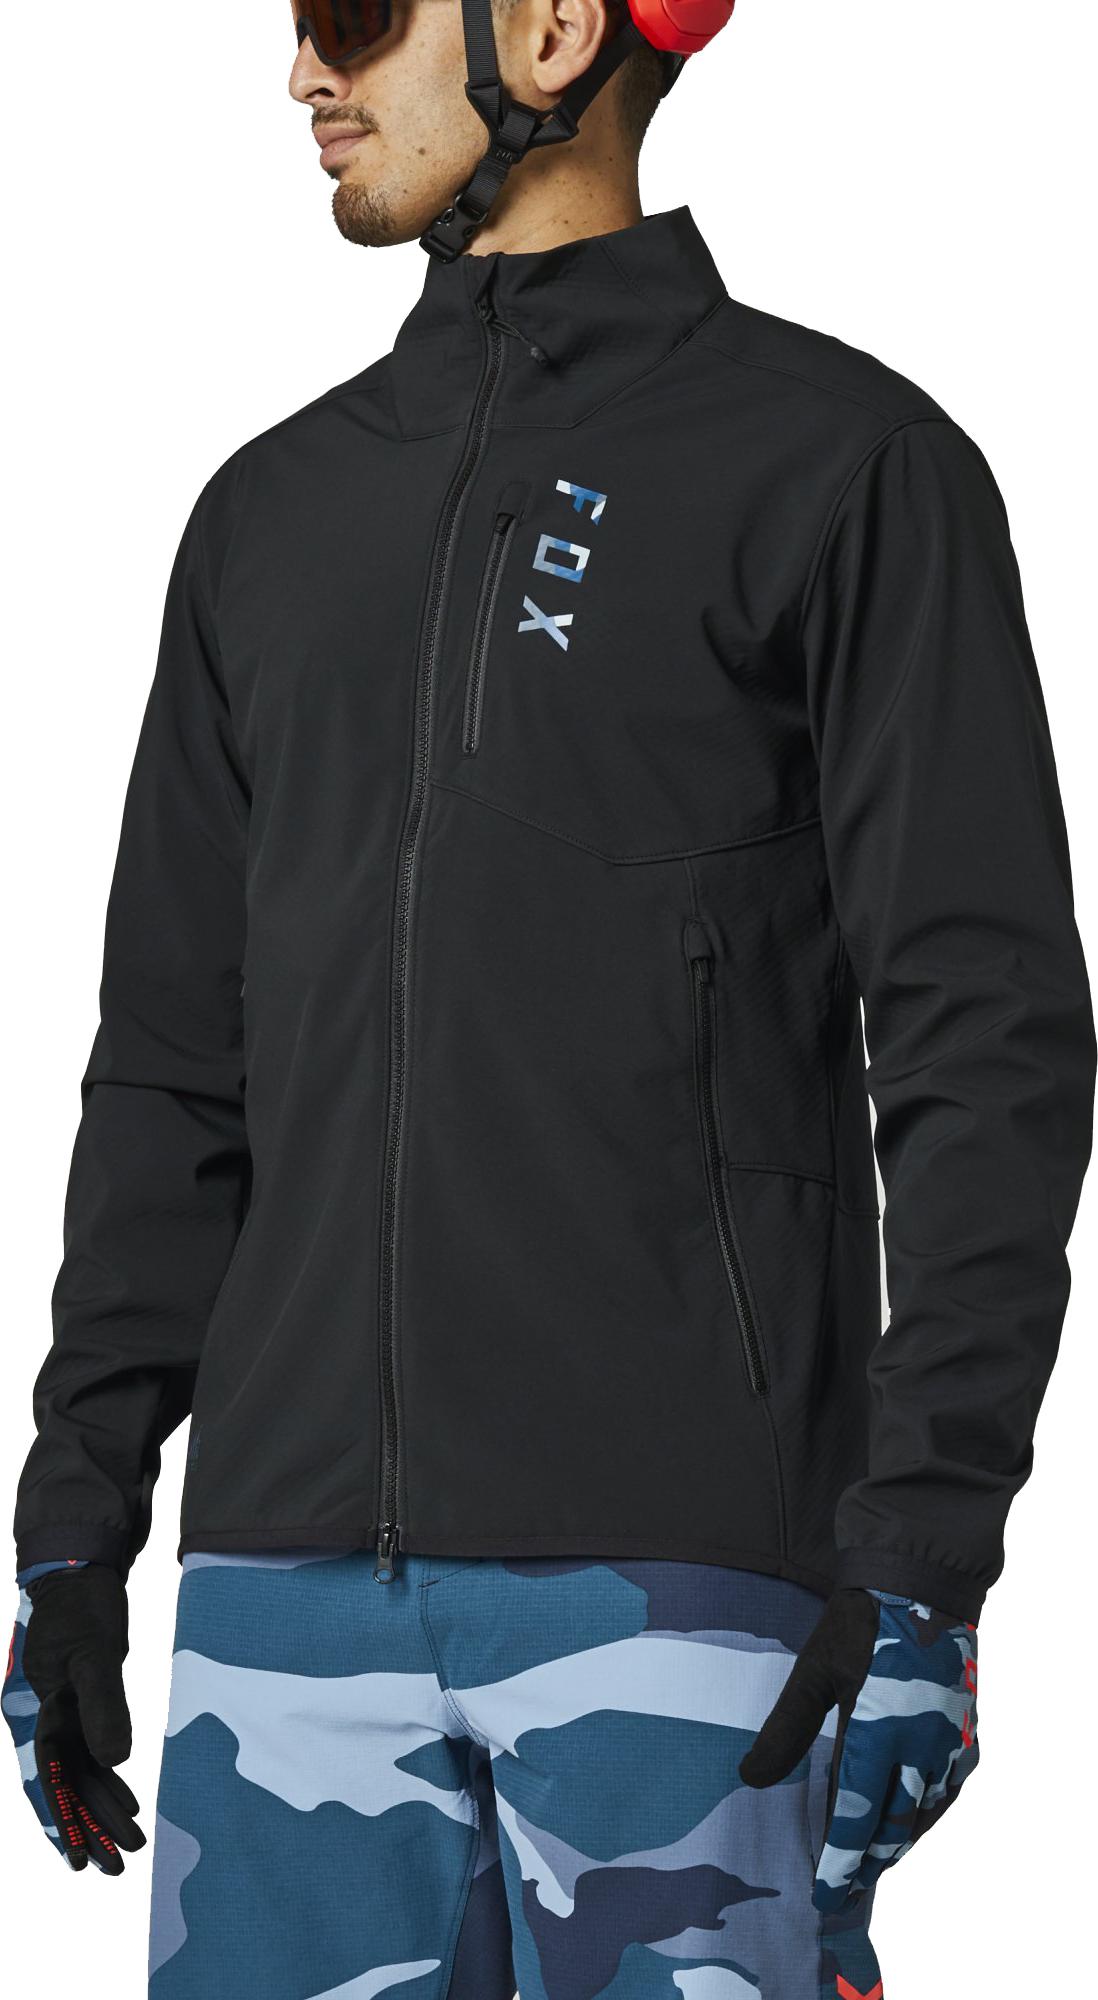 Fox Racing Ranger Fire Cycling Jacket - Black/blue